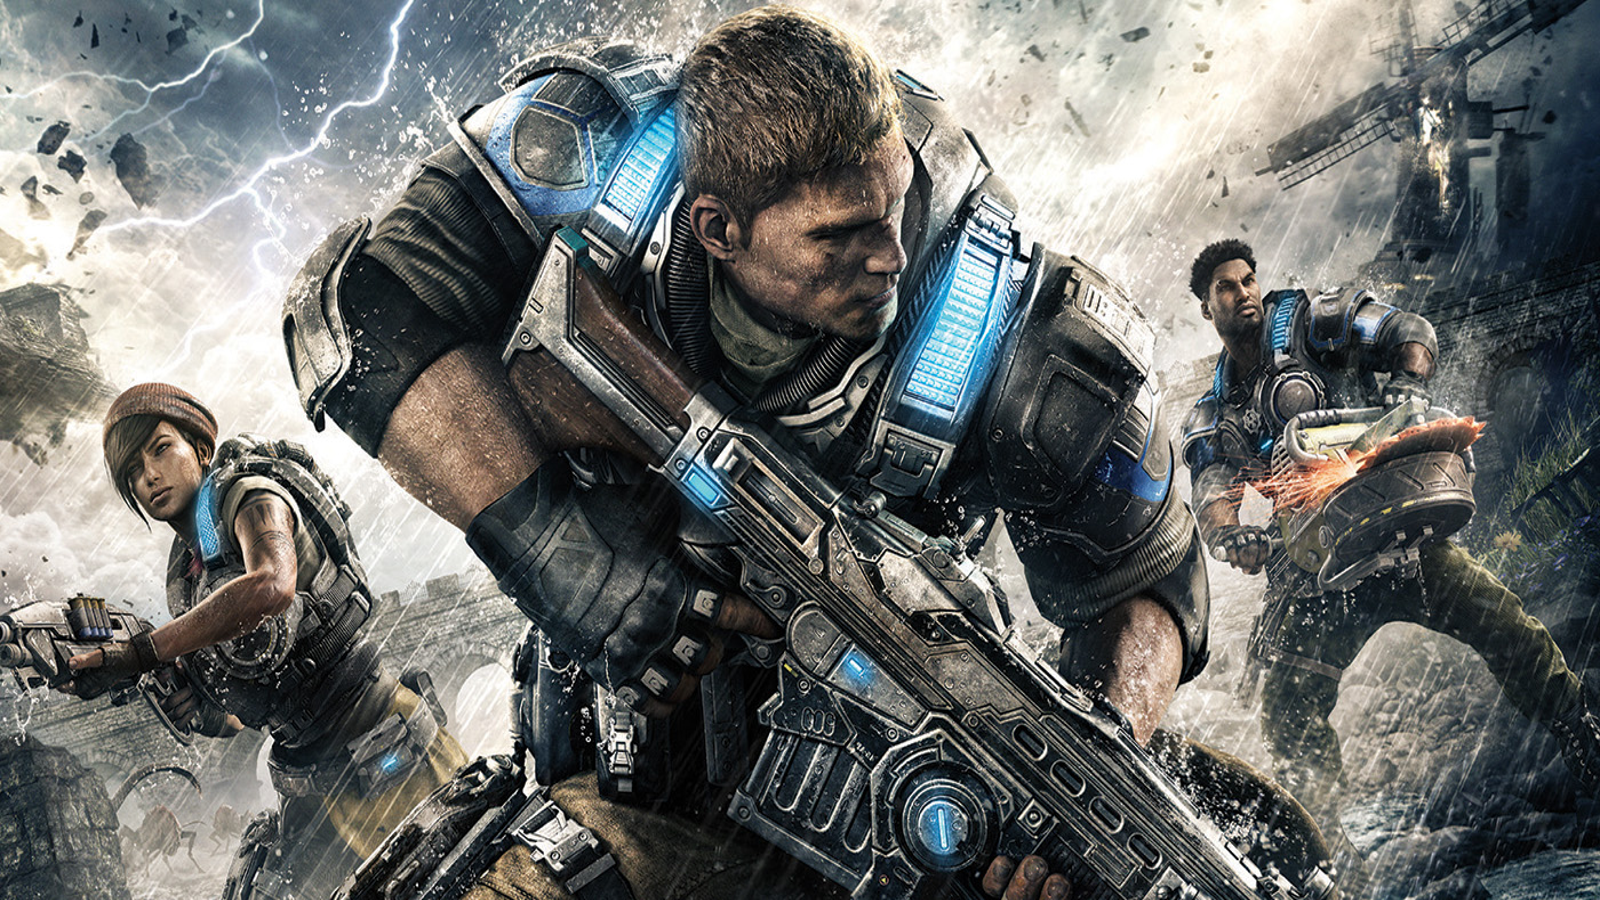 Watch Gears of War 4's E3 announcement gameplay trailer in 4K Ultra HD